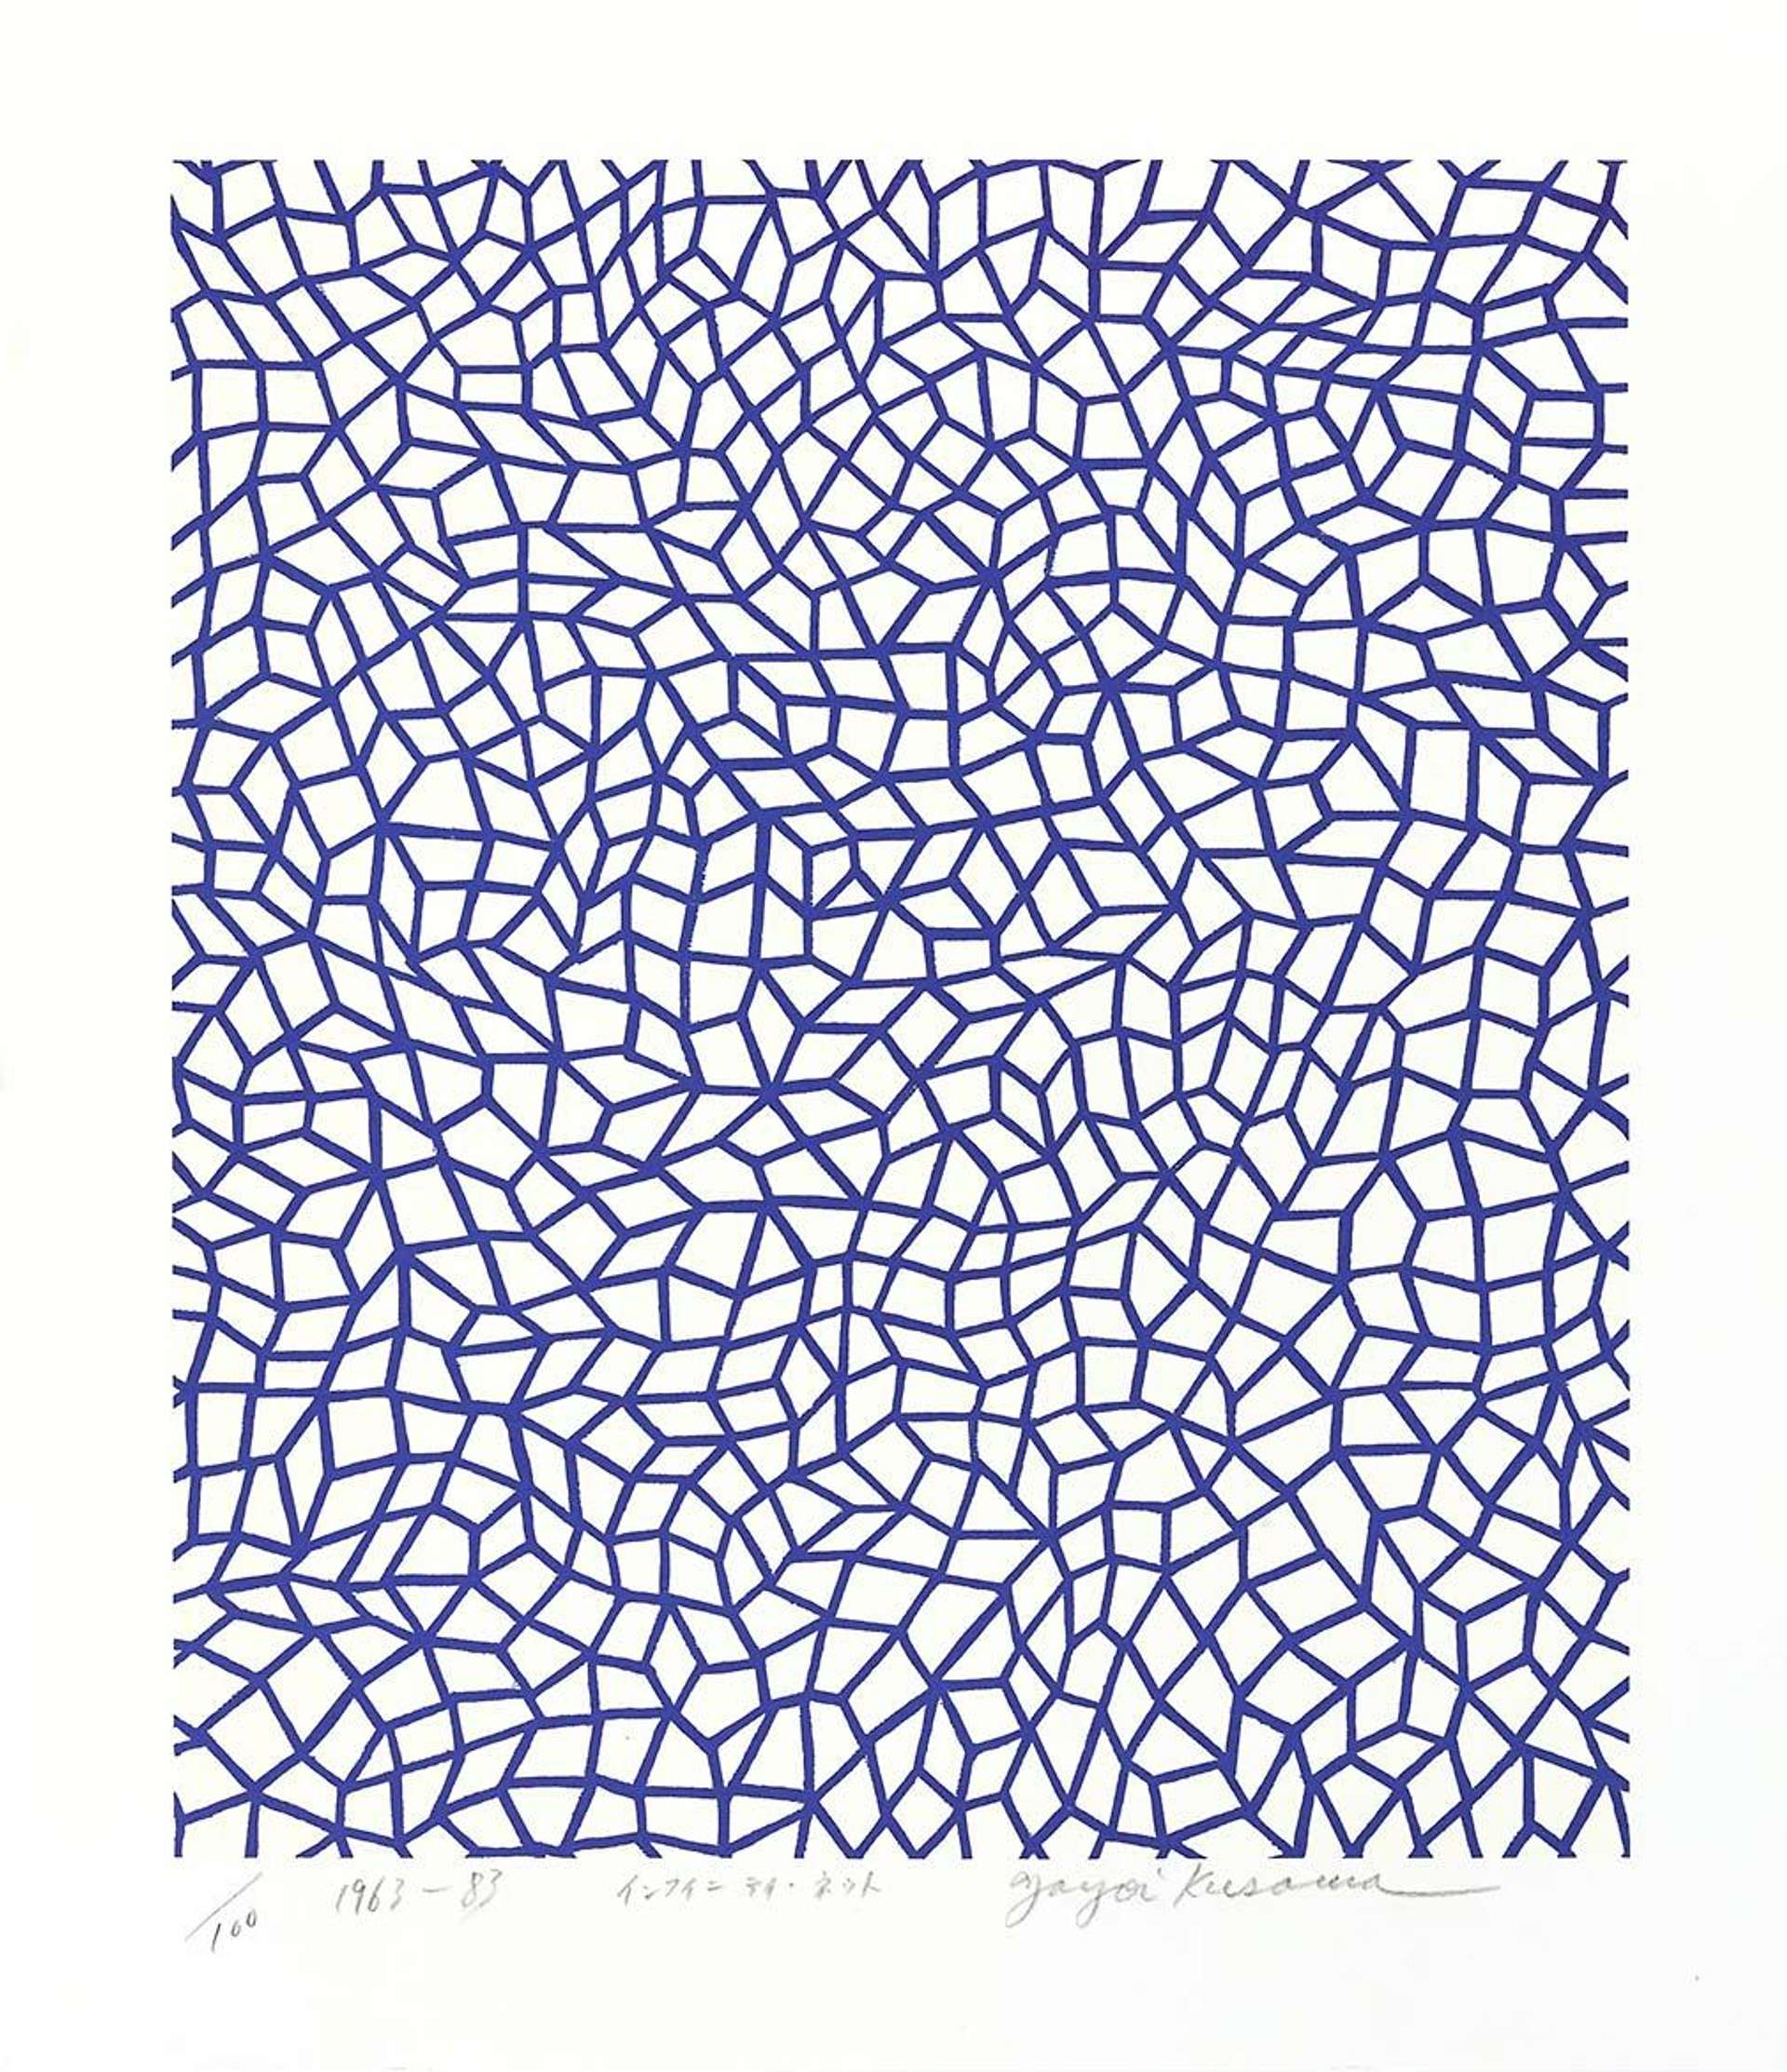 Yayoi Kusama’s Infinity Nets, Kusama 26. A screenprint of a blue geometric patterns outlined against a white background.